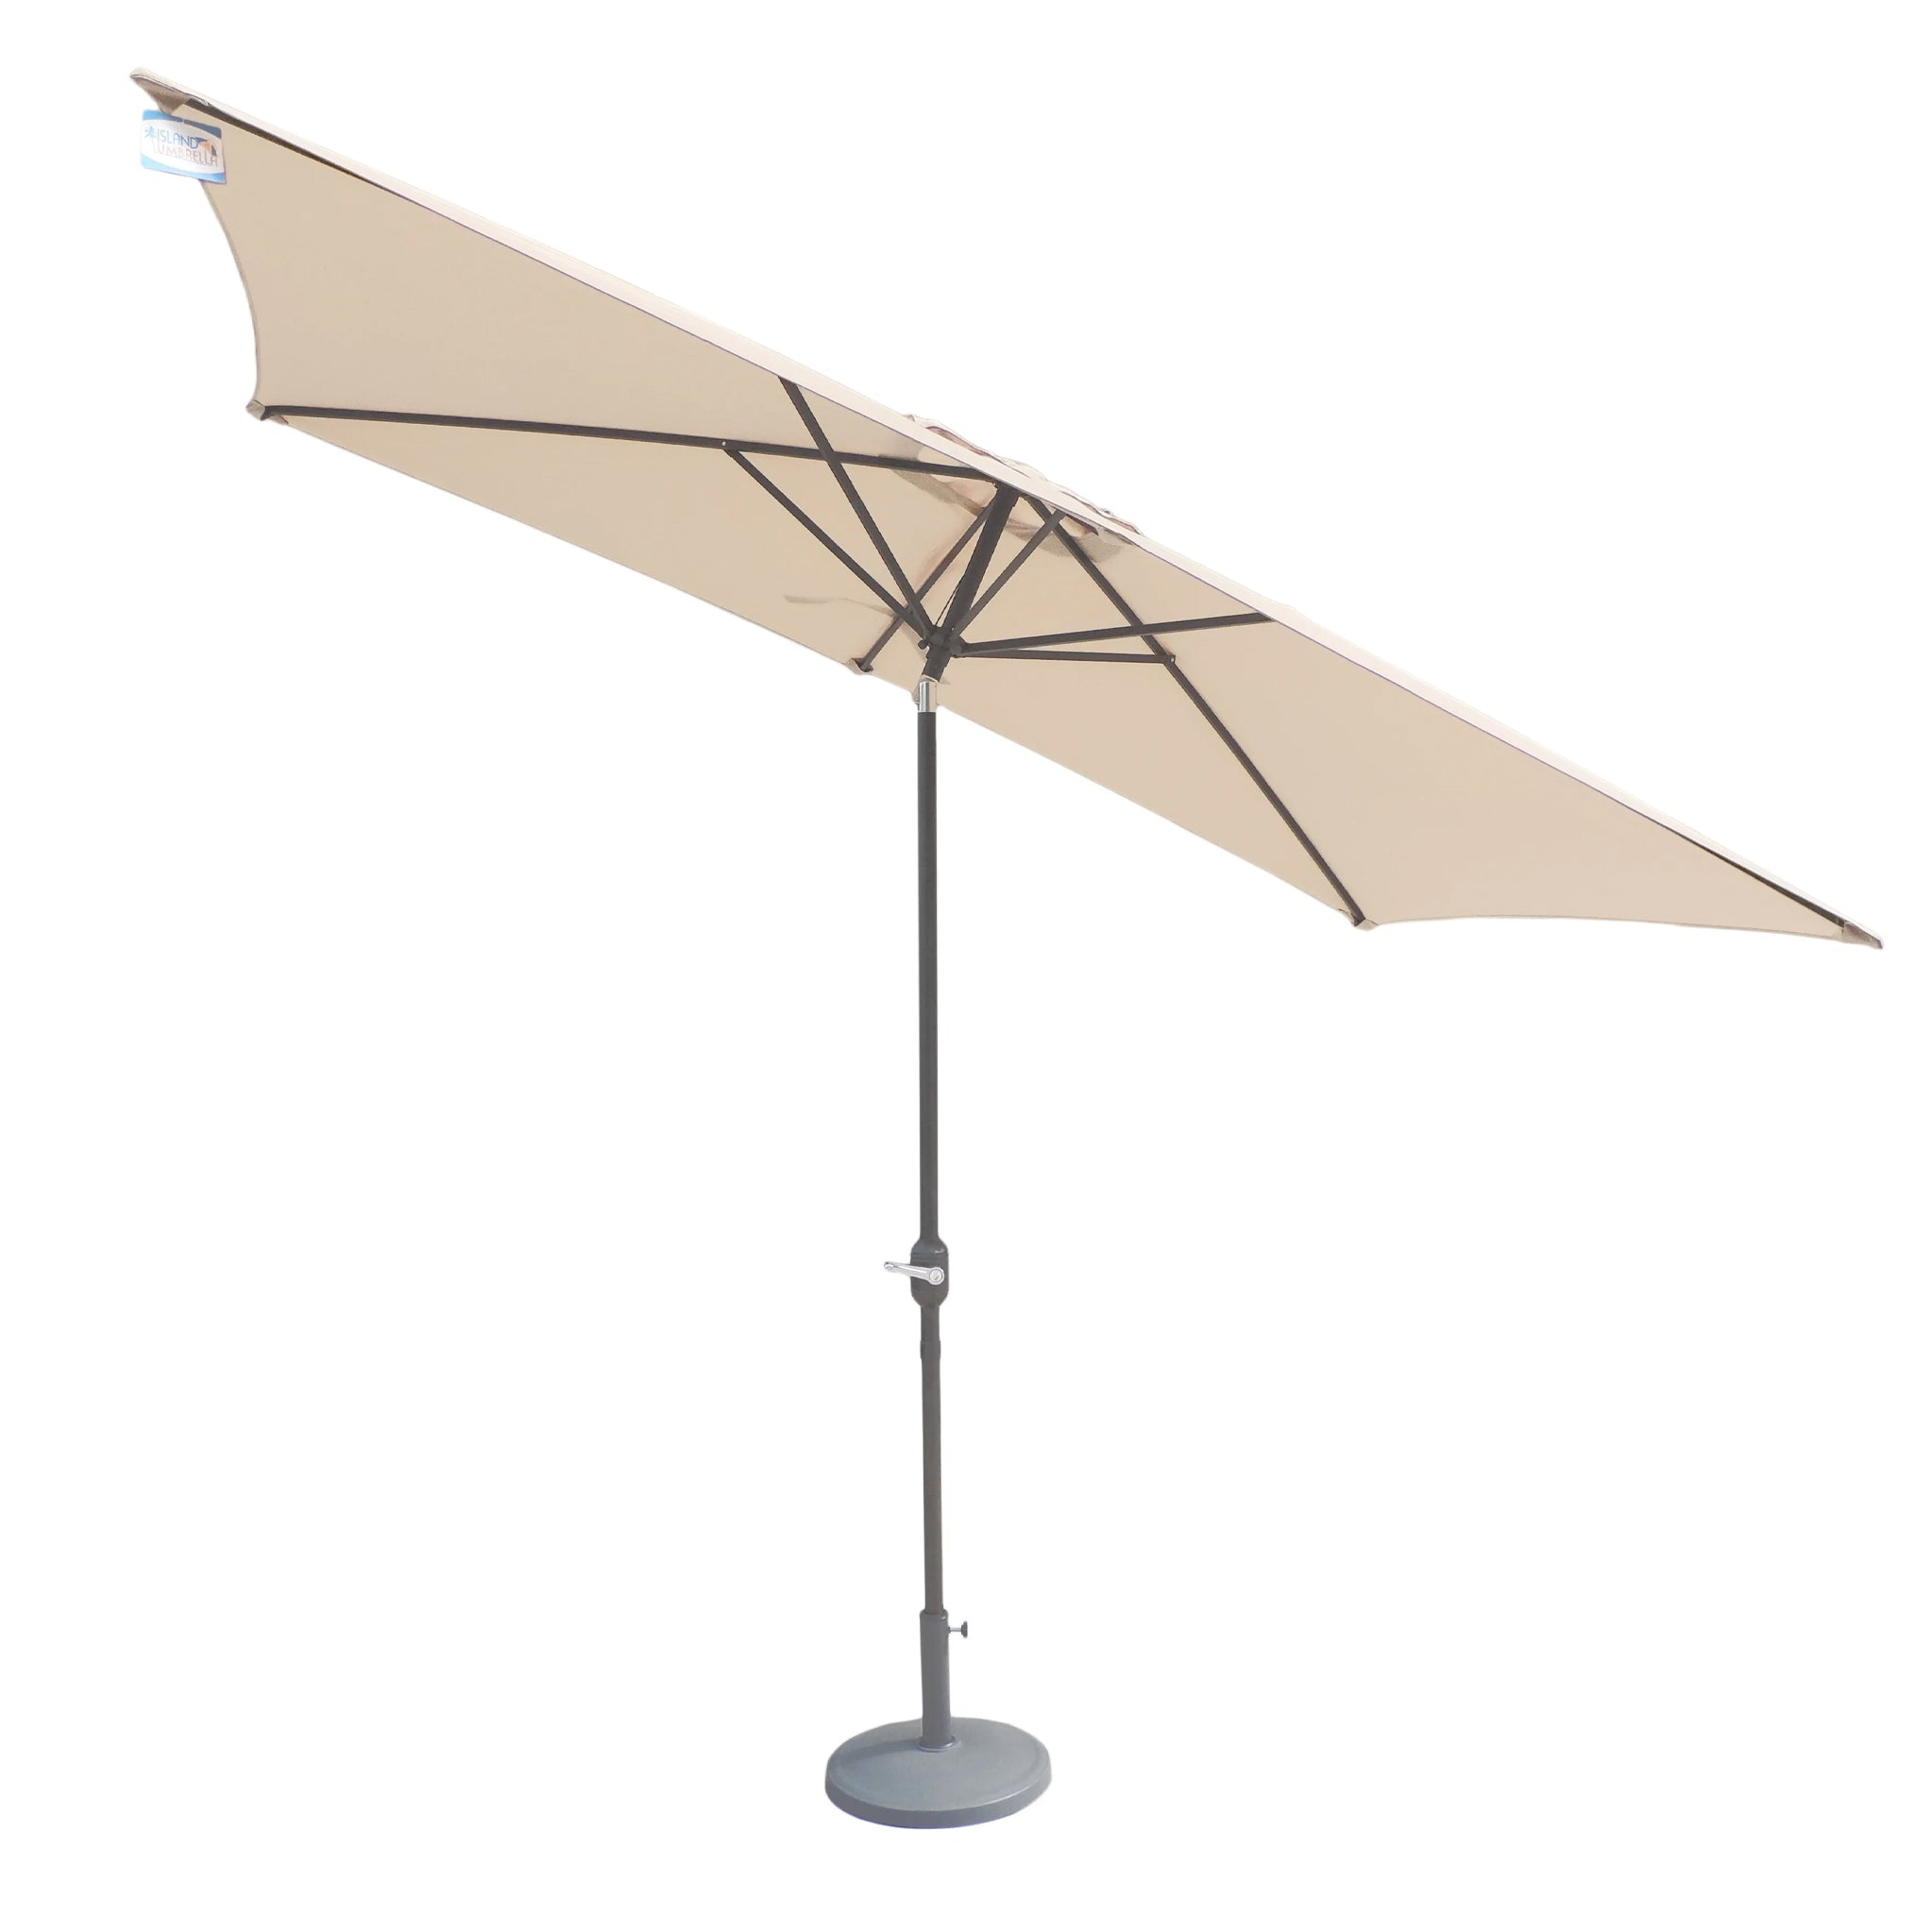 2.4 x 3m Parasol Grey Aluminium Crank Tilt Parasol Canopy – Roseland Furniture